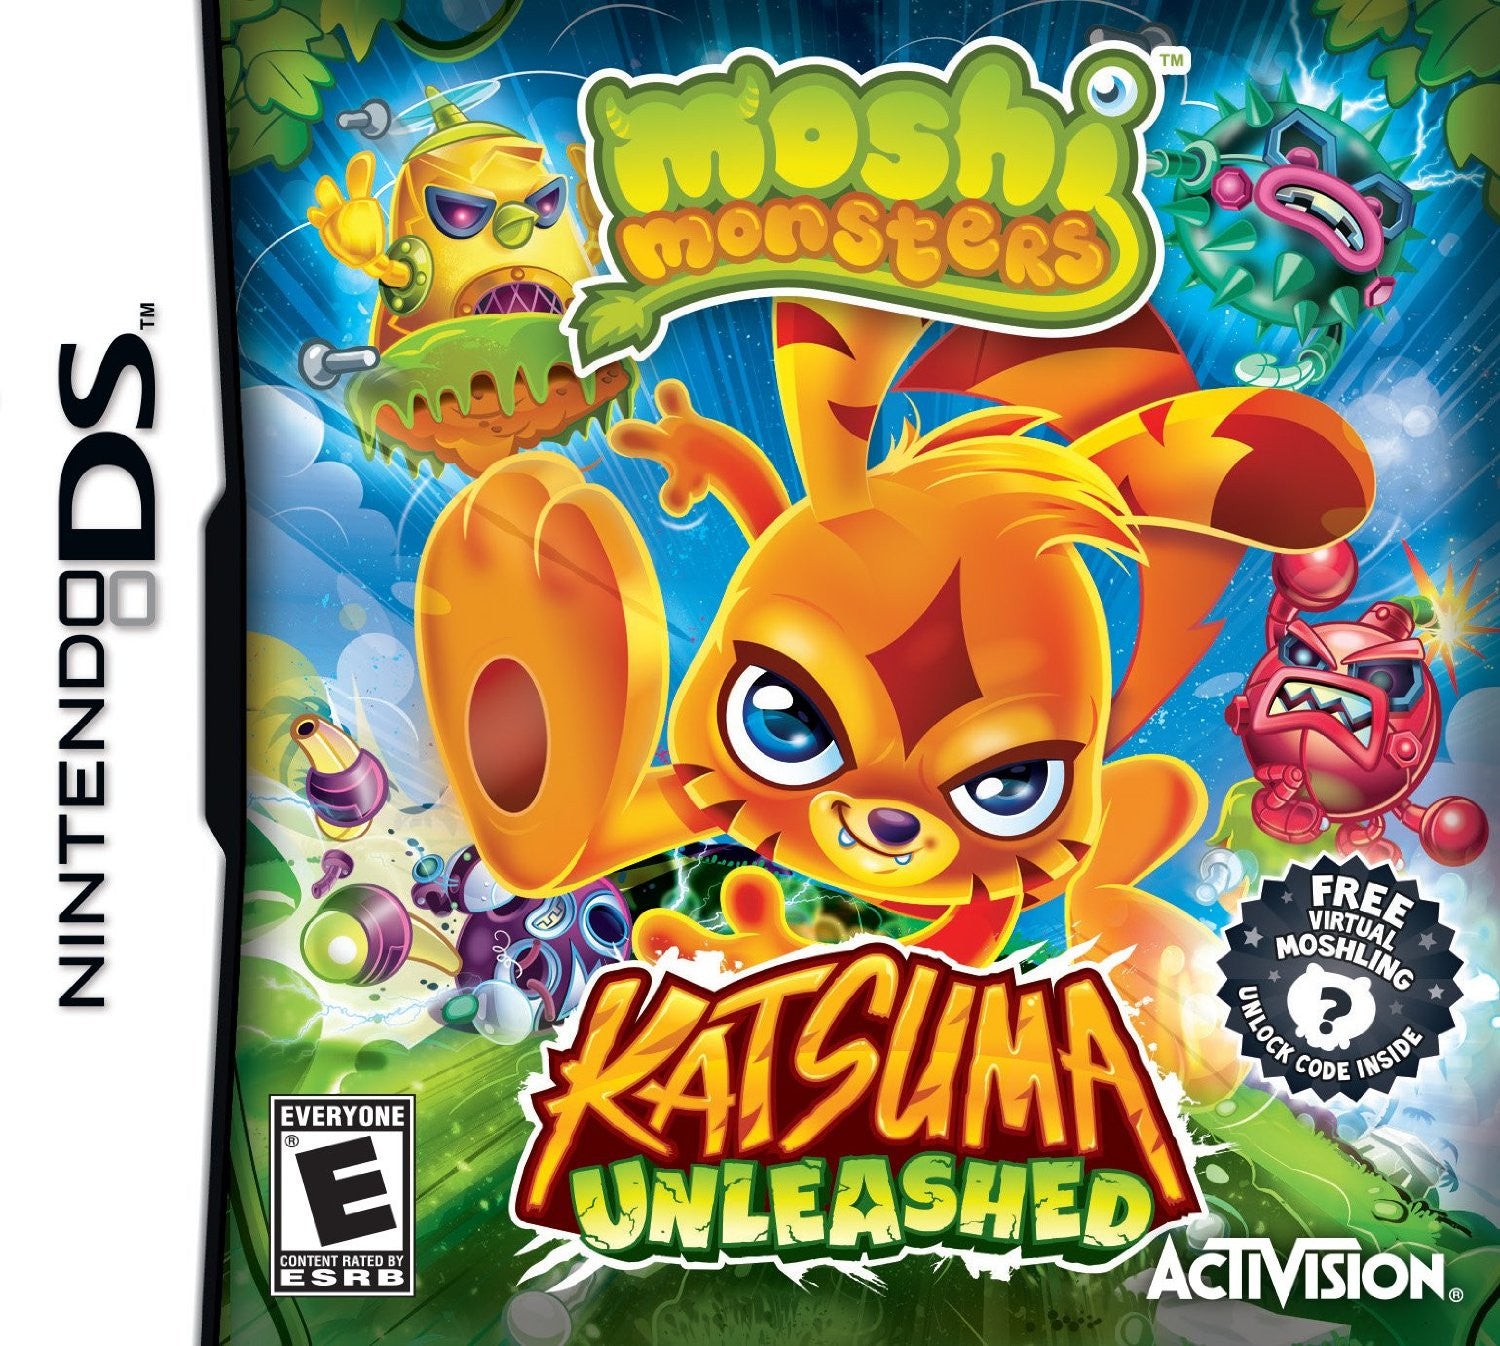 Moshi Monsters: Katsuma Unleashed - Nintendo DS